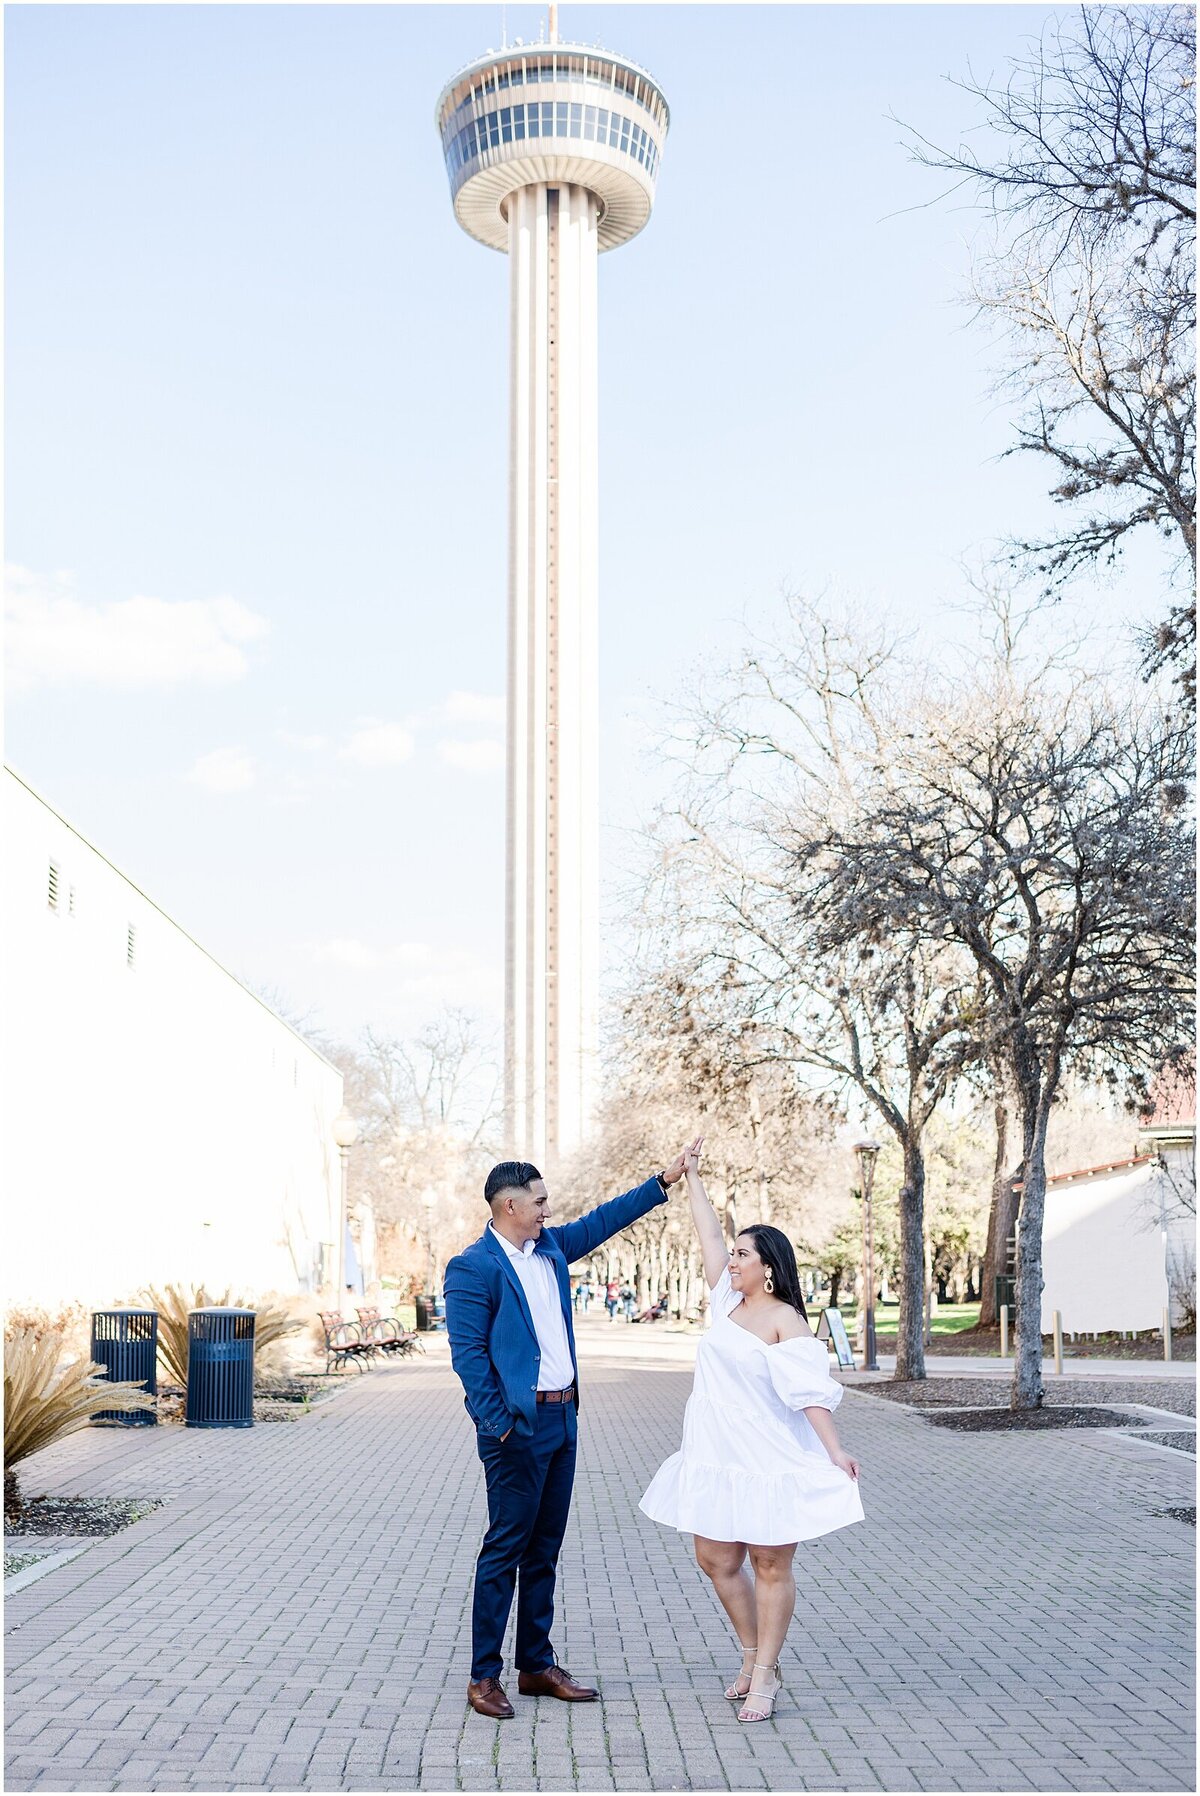 Melissa & Arturo Photography | Tower of The Americas Engagement - Kayla & Frank 051